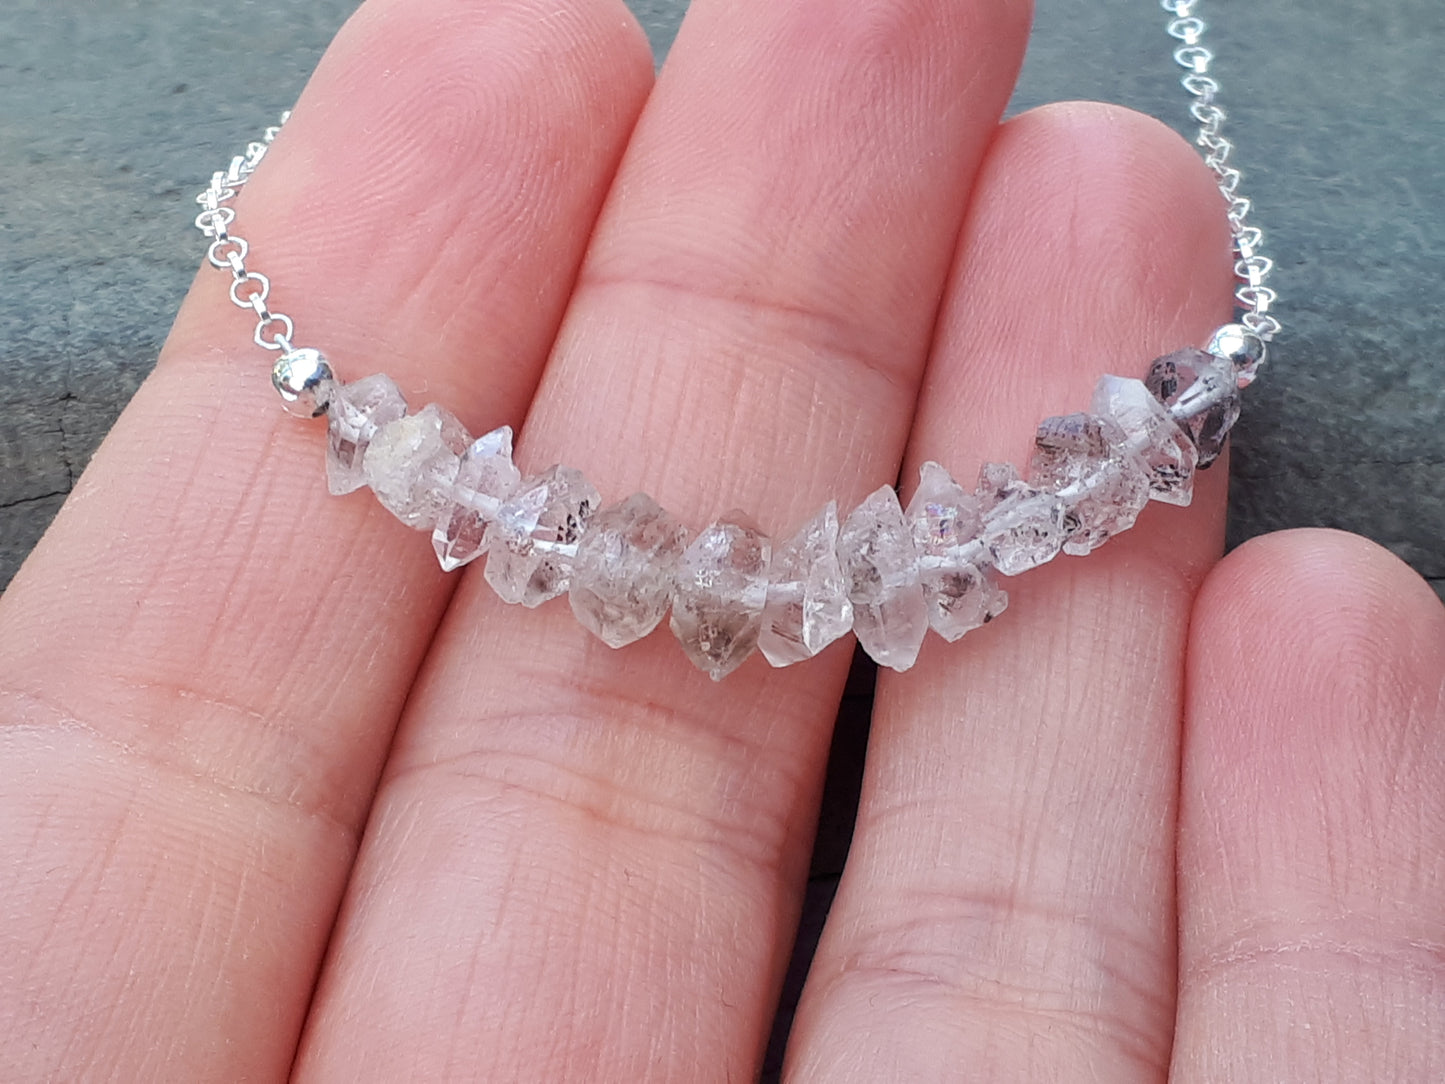 Herkimer diamond necklace. April birthstone necklace.